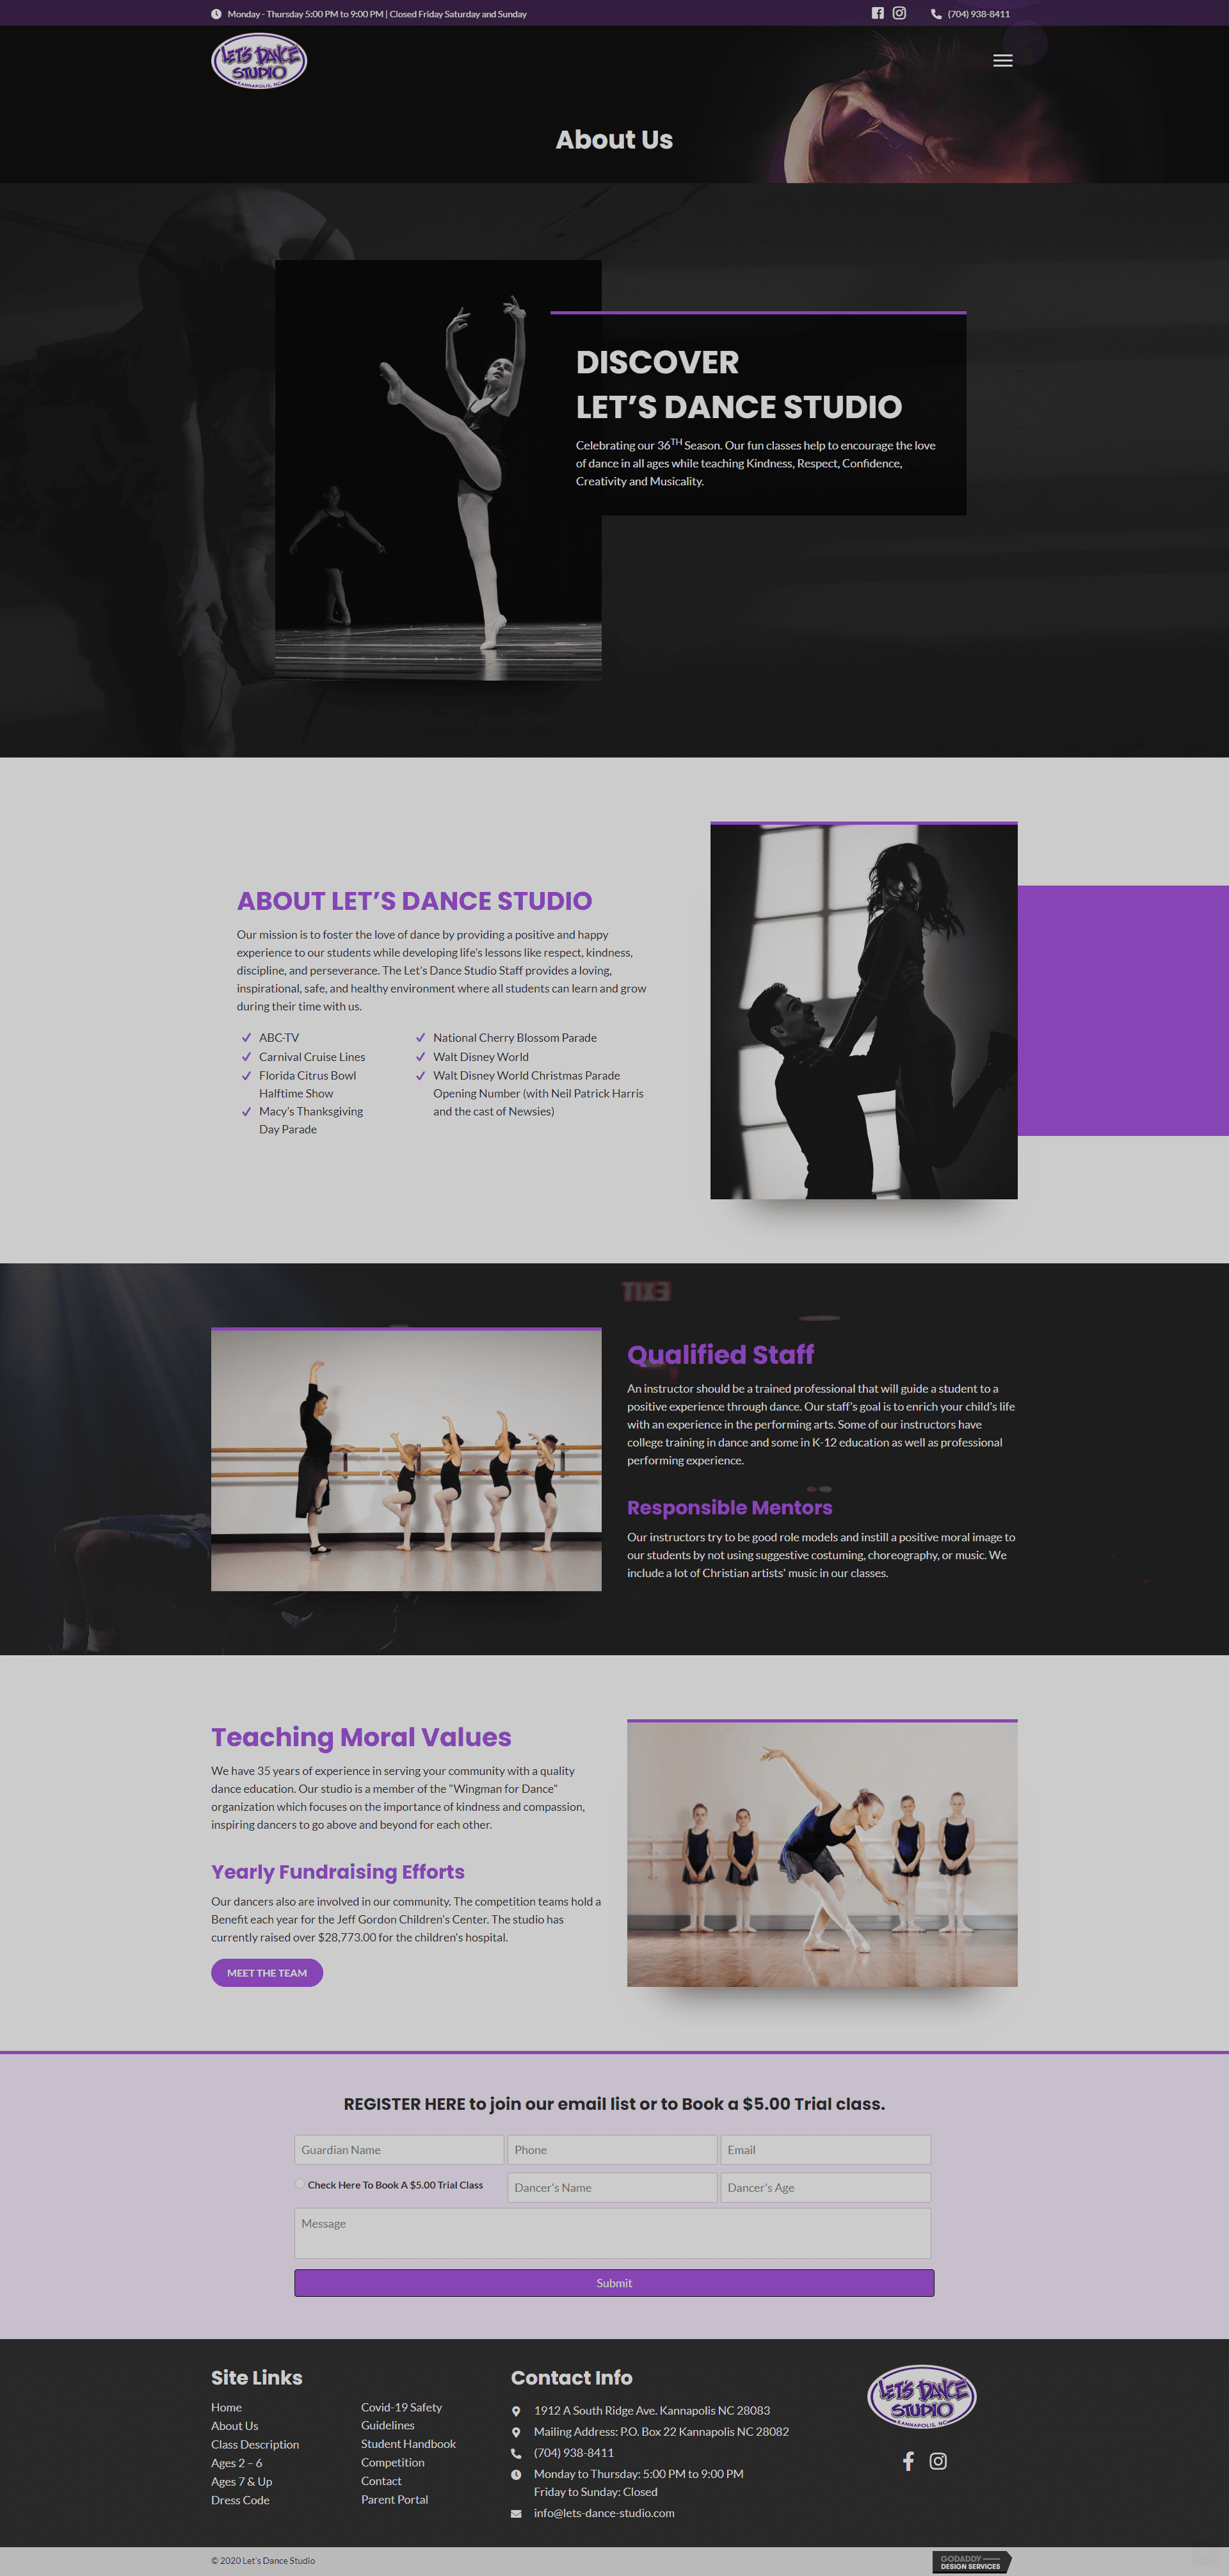 Let's Dance Studio About Us Page